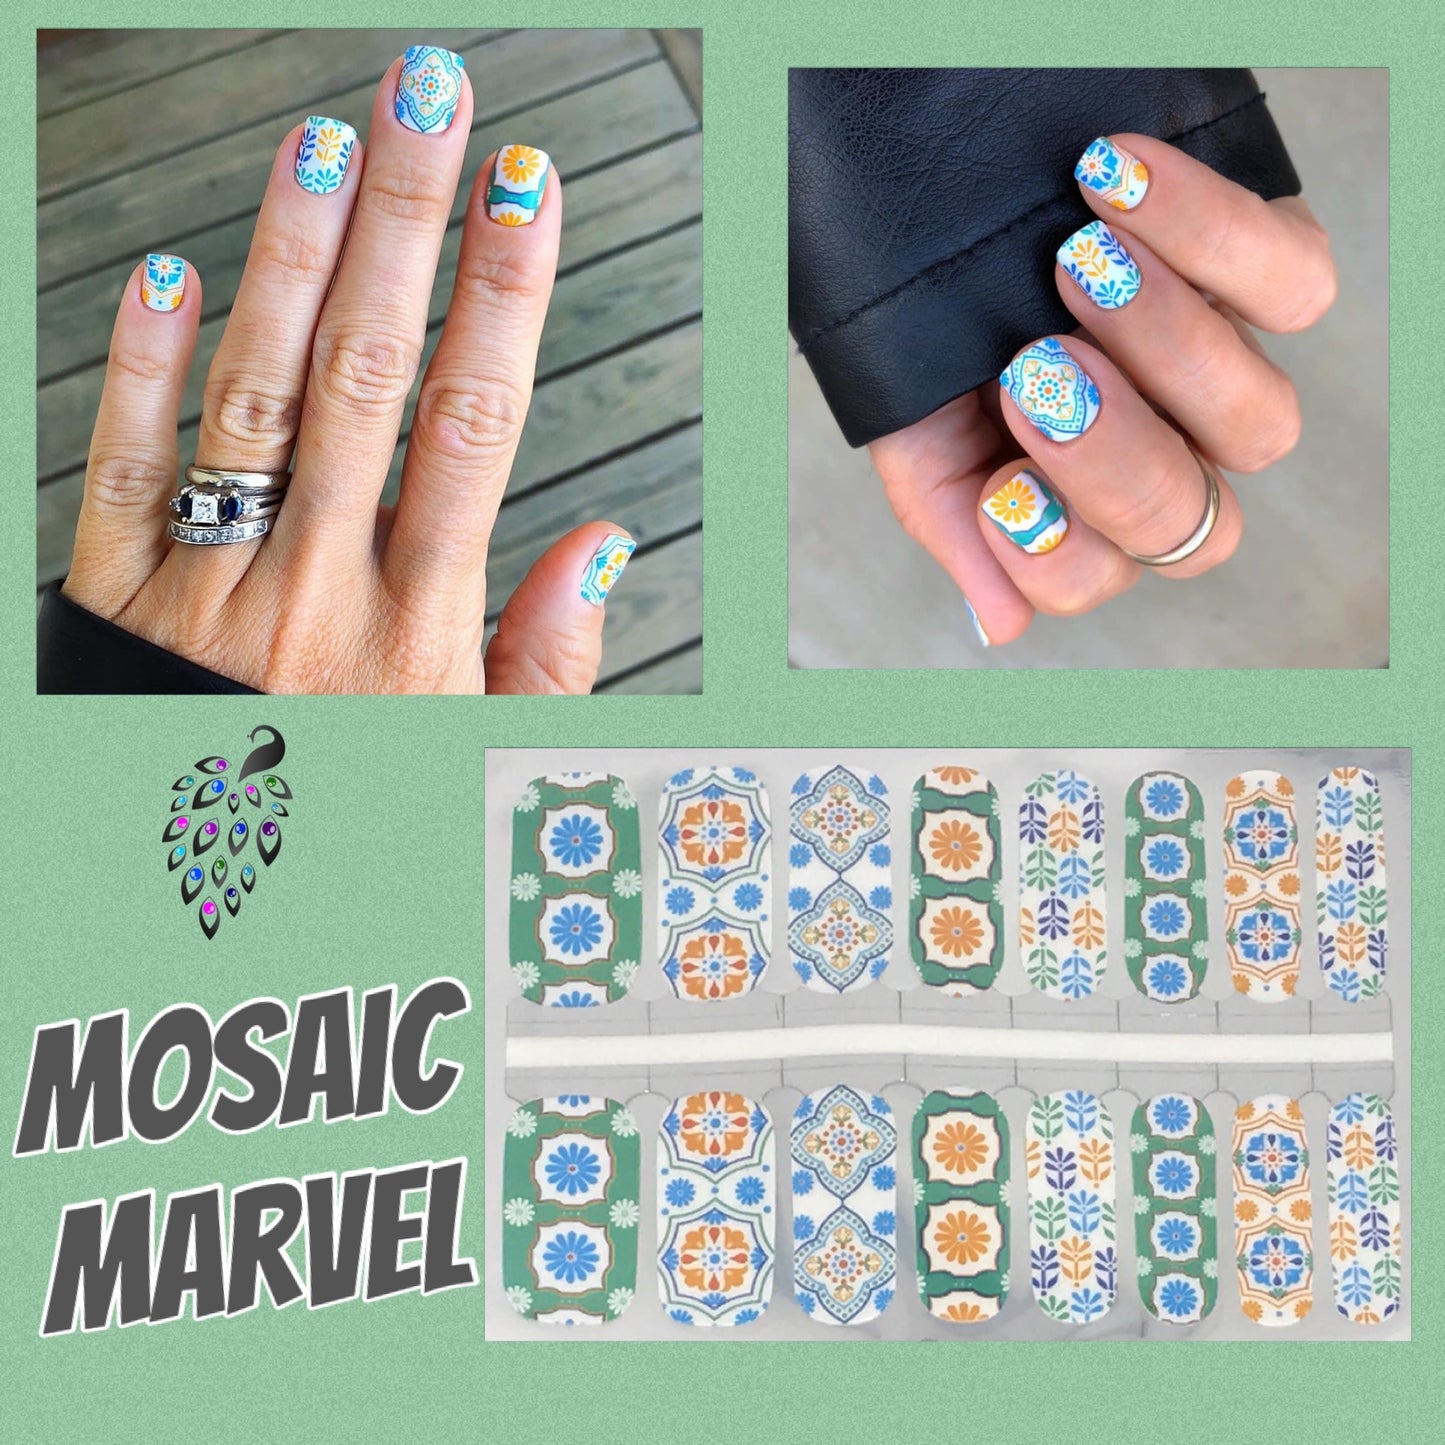 Mosaic Marvel